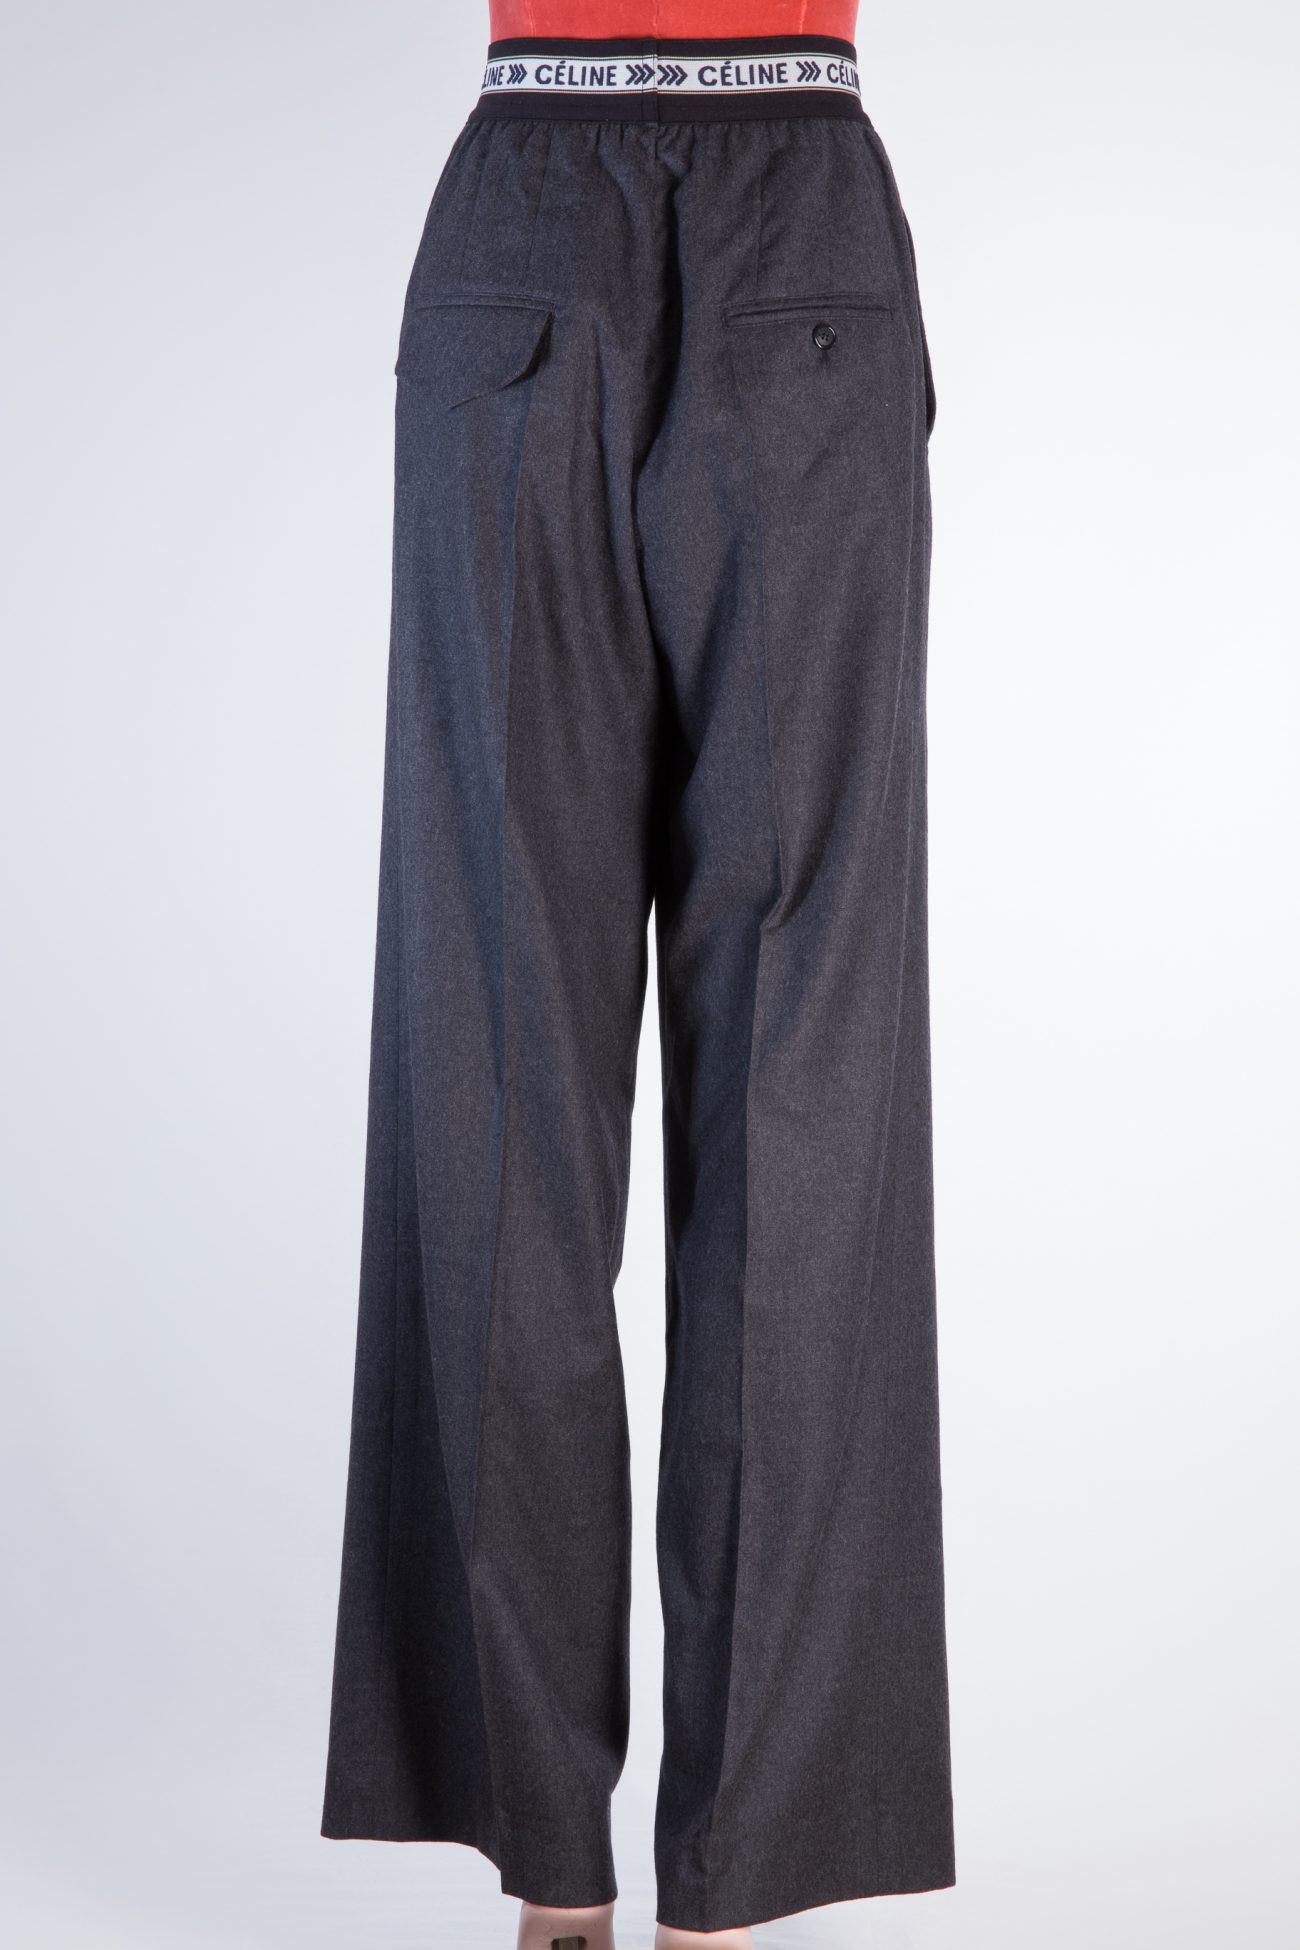 Celine Trousers, FR36 - Huntessa Luxury Online Consignment Boutique